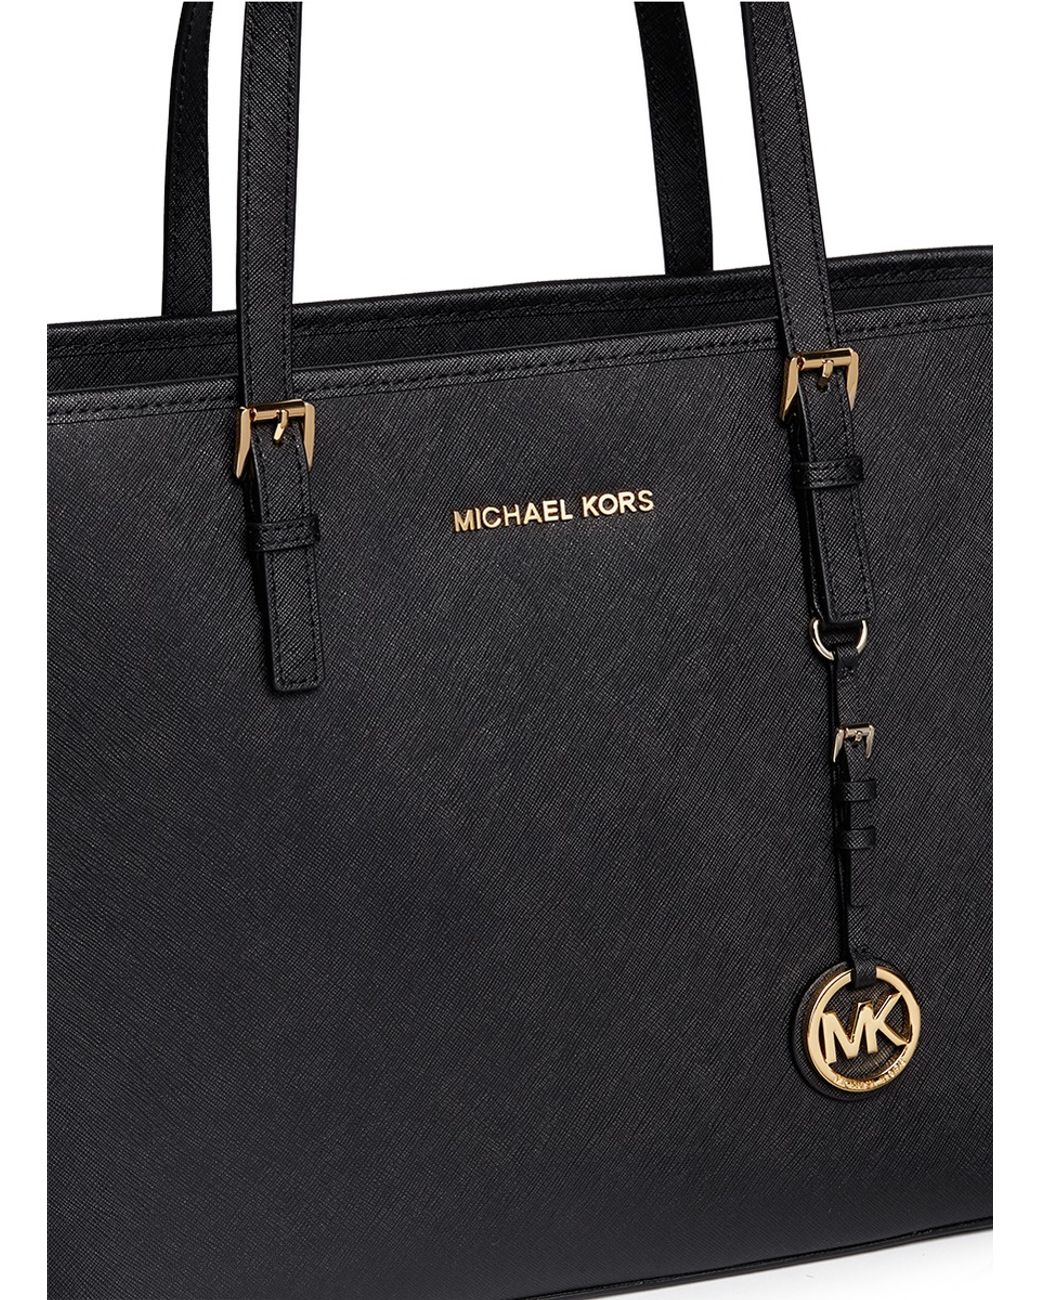 MICHAEL Michael Kors Jet Set Top-Zip Large Travel Tote Bag Black One Size